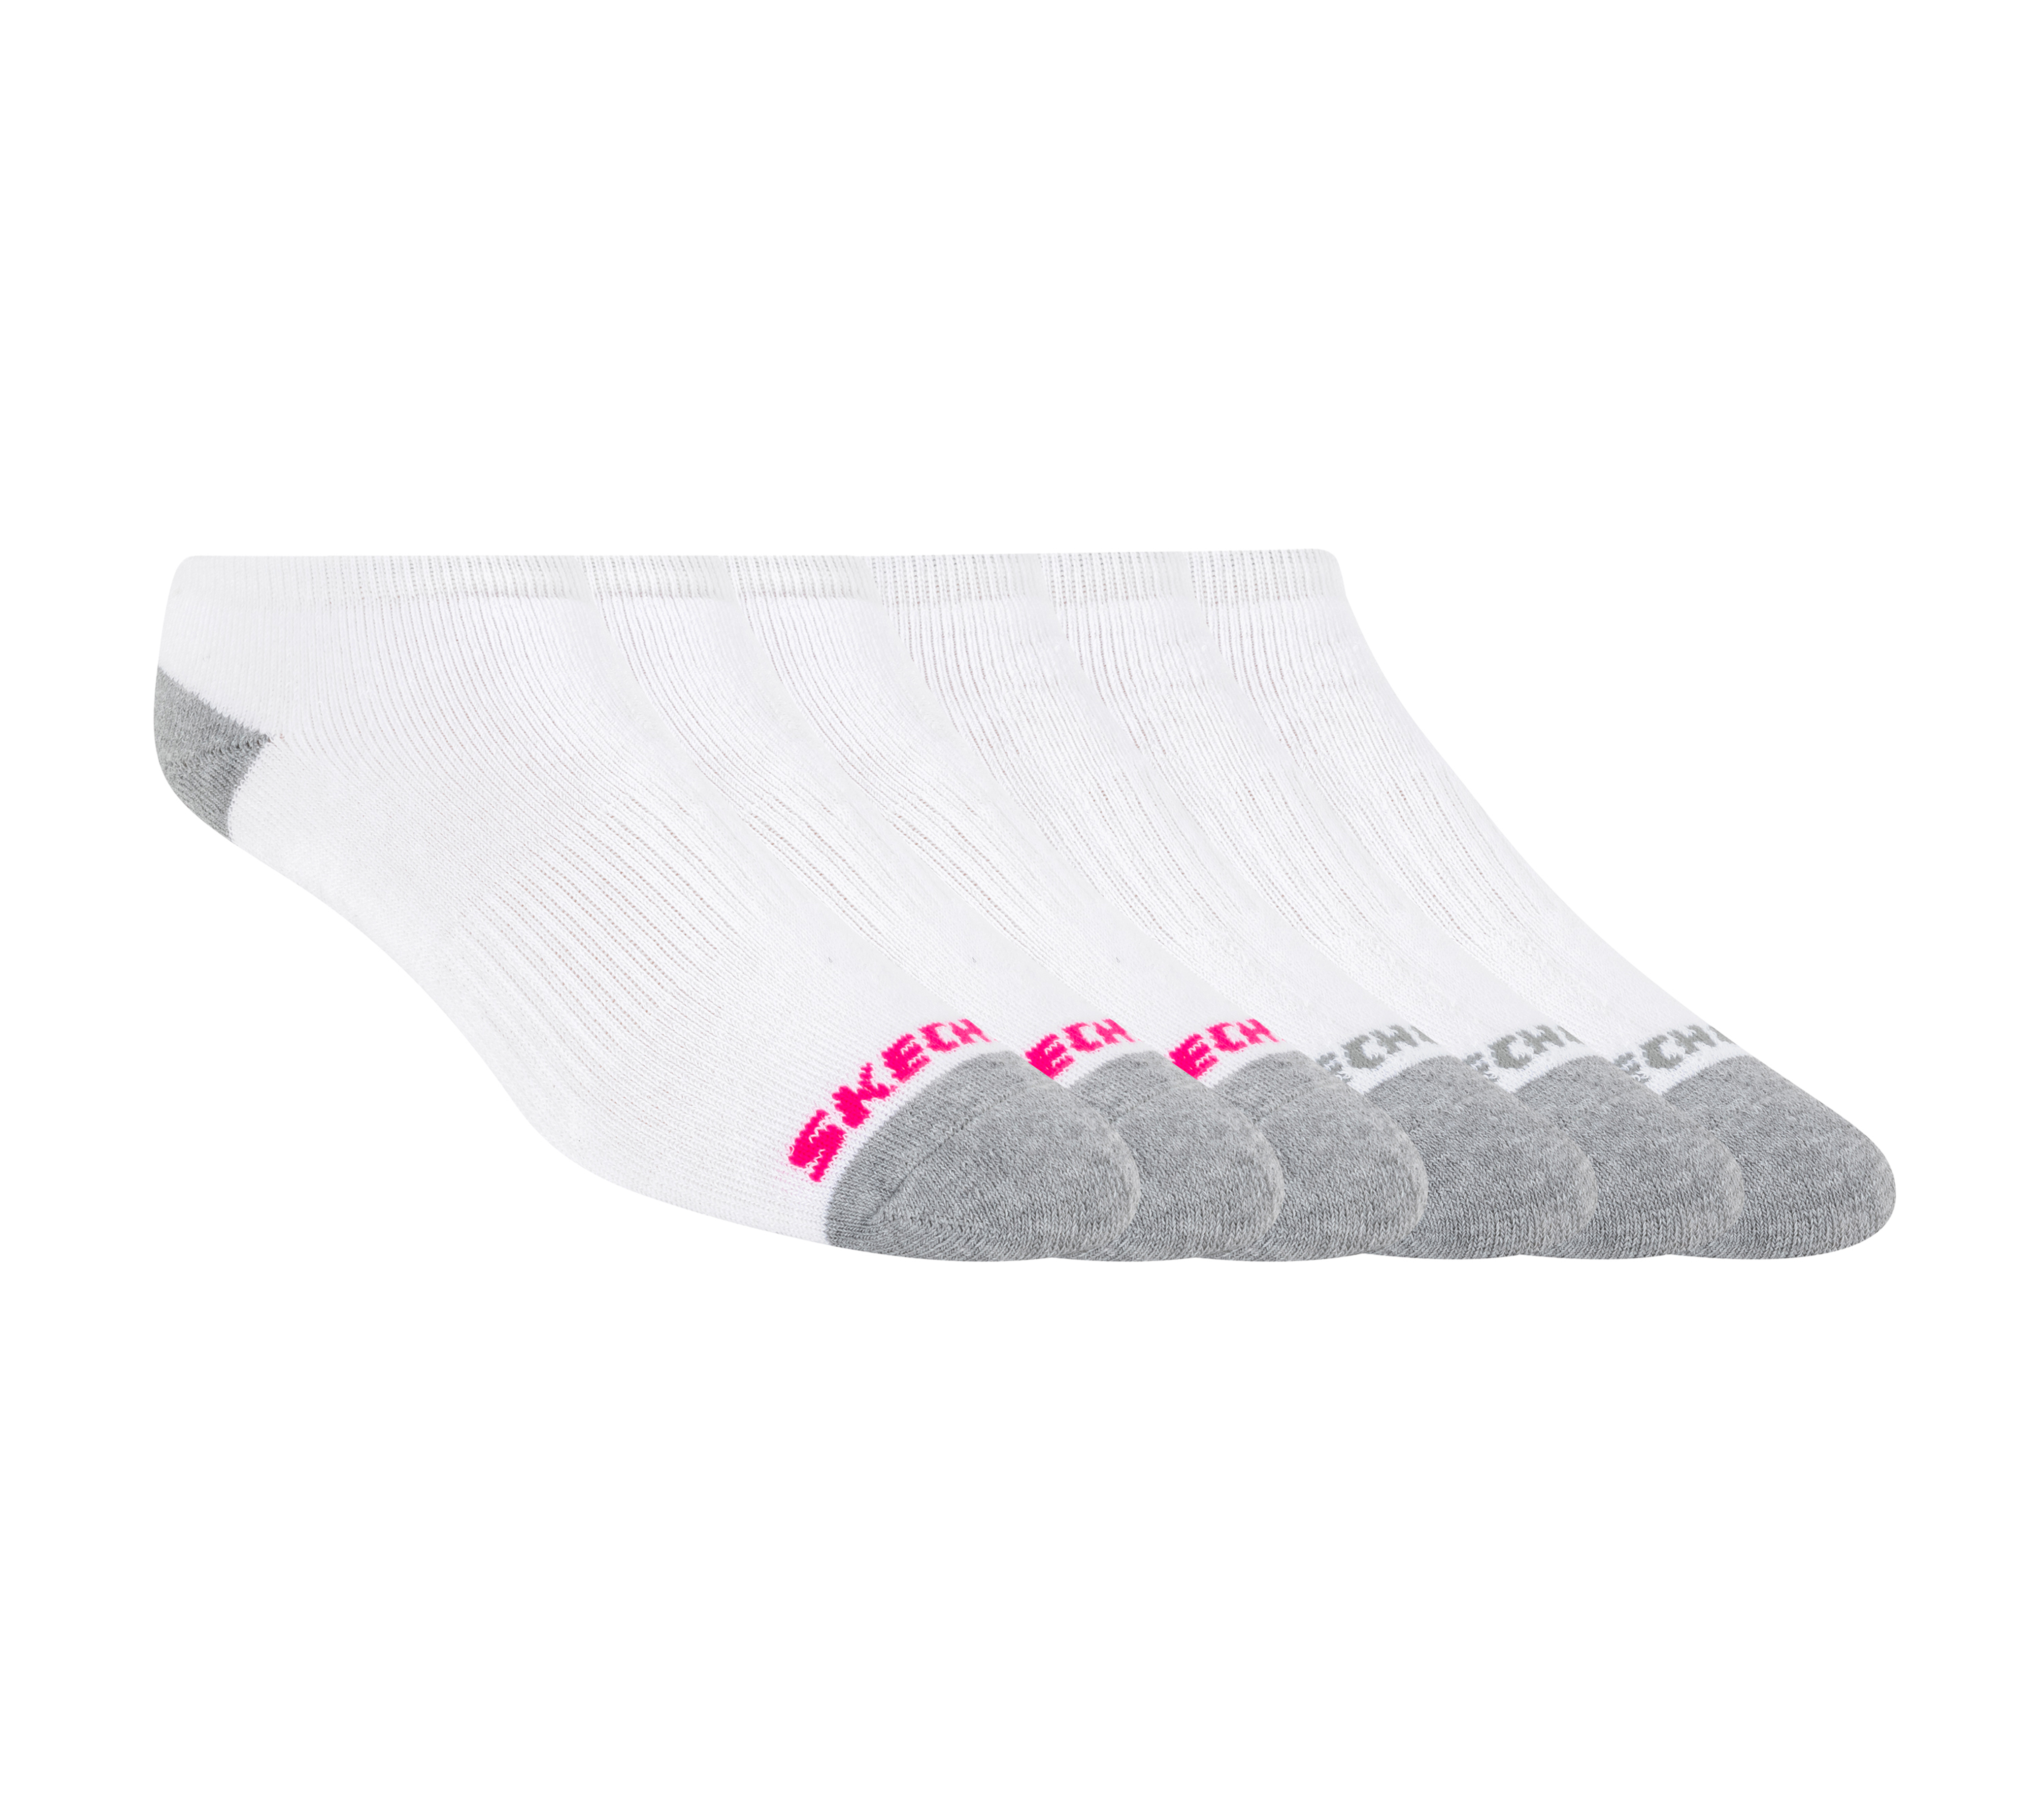 Skechers Women's 6 Pack Low Cut Walking Socks Size Medium White Poly Blend